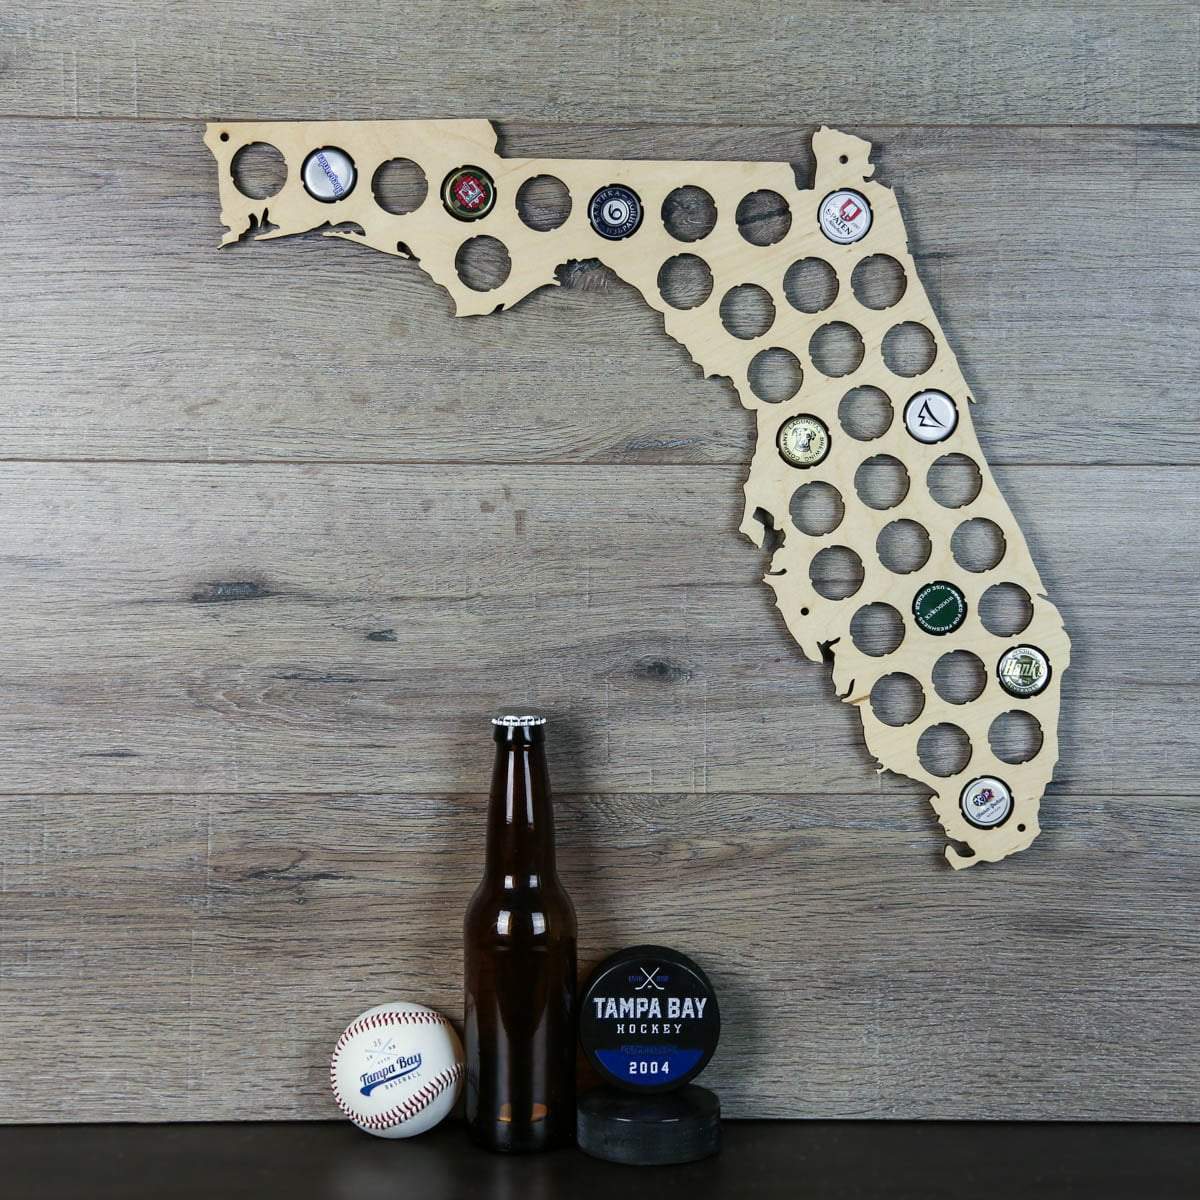 Torched Products Beer Bottle Cap Holder Florida Beer Cap Map (777548234869)